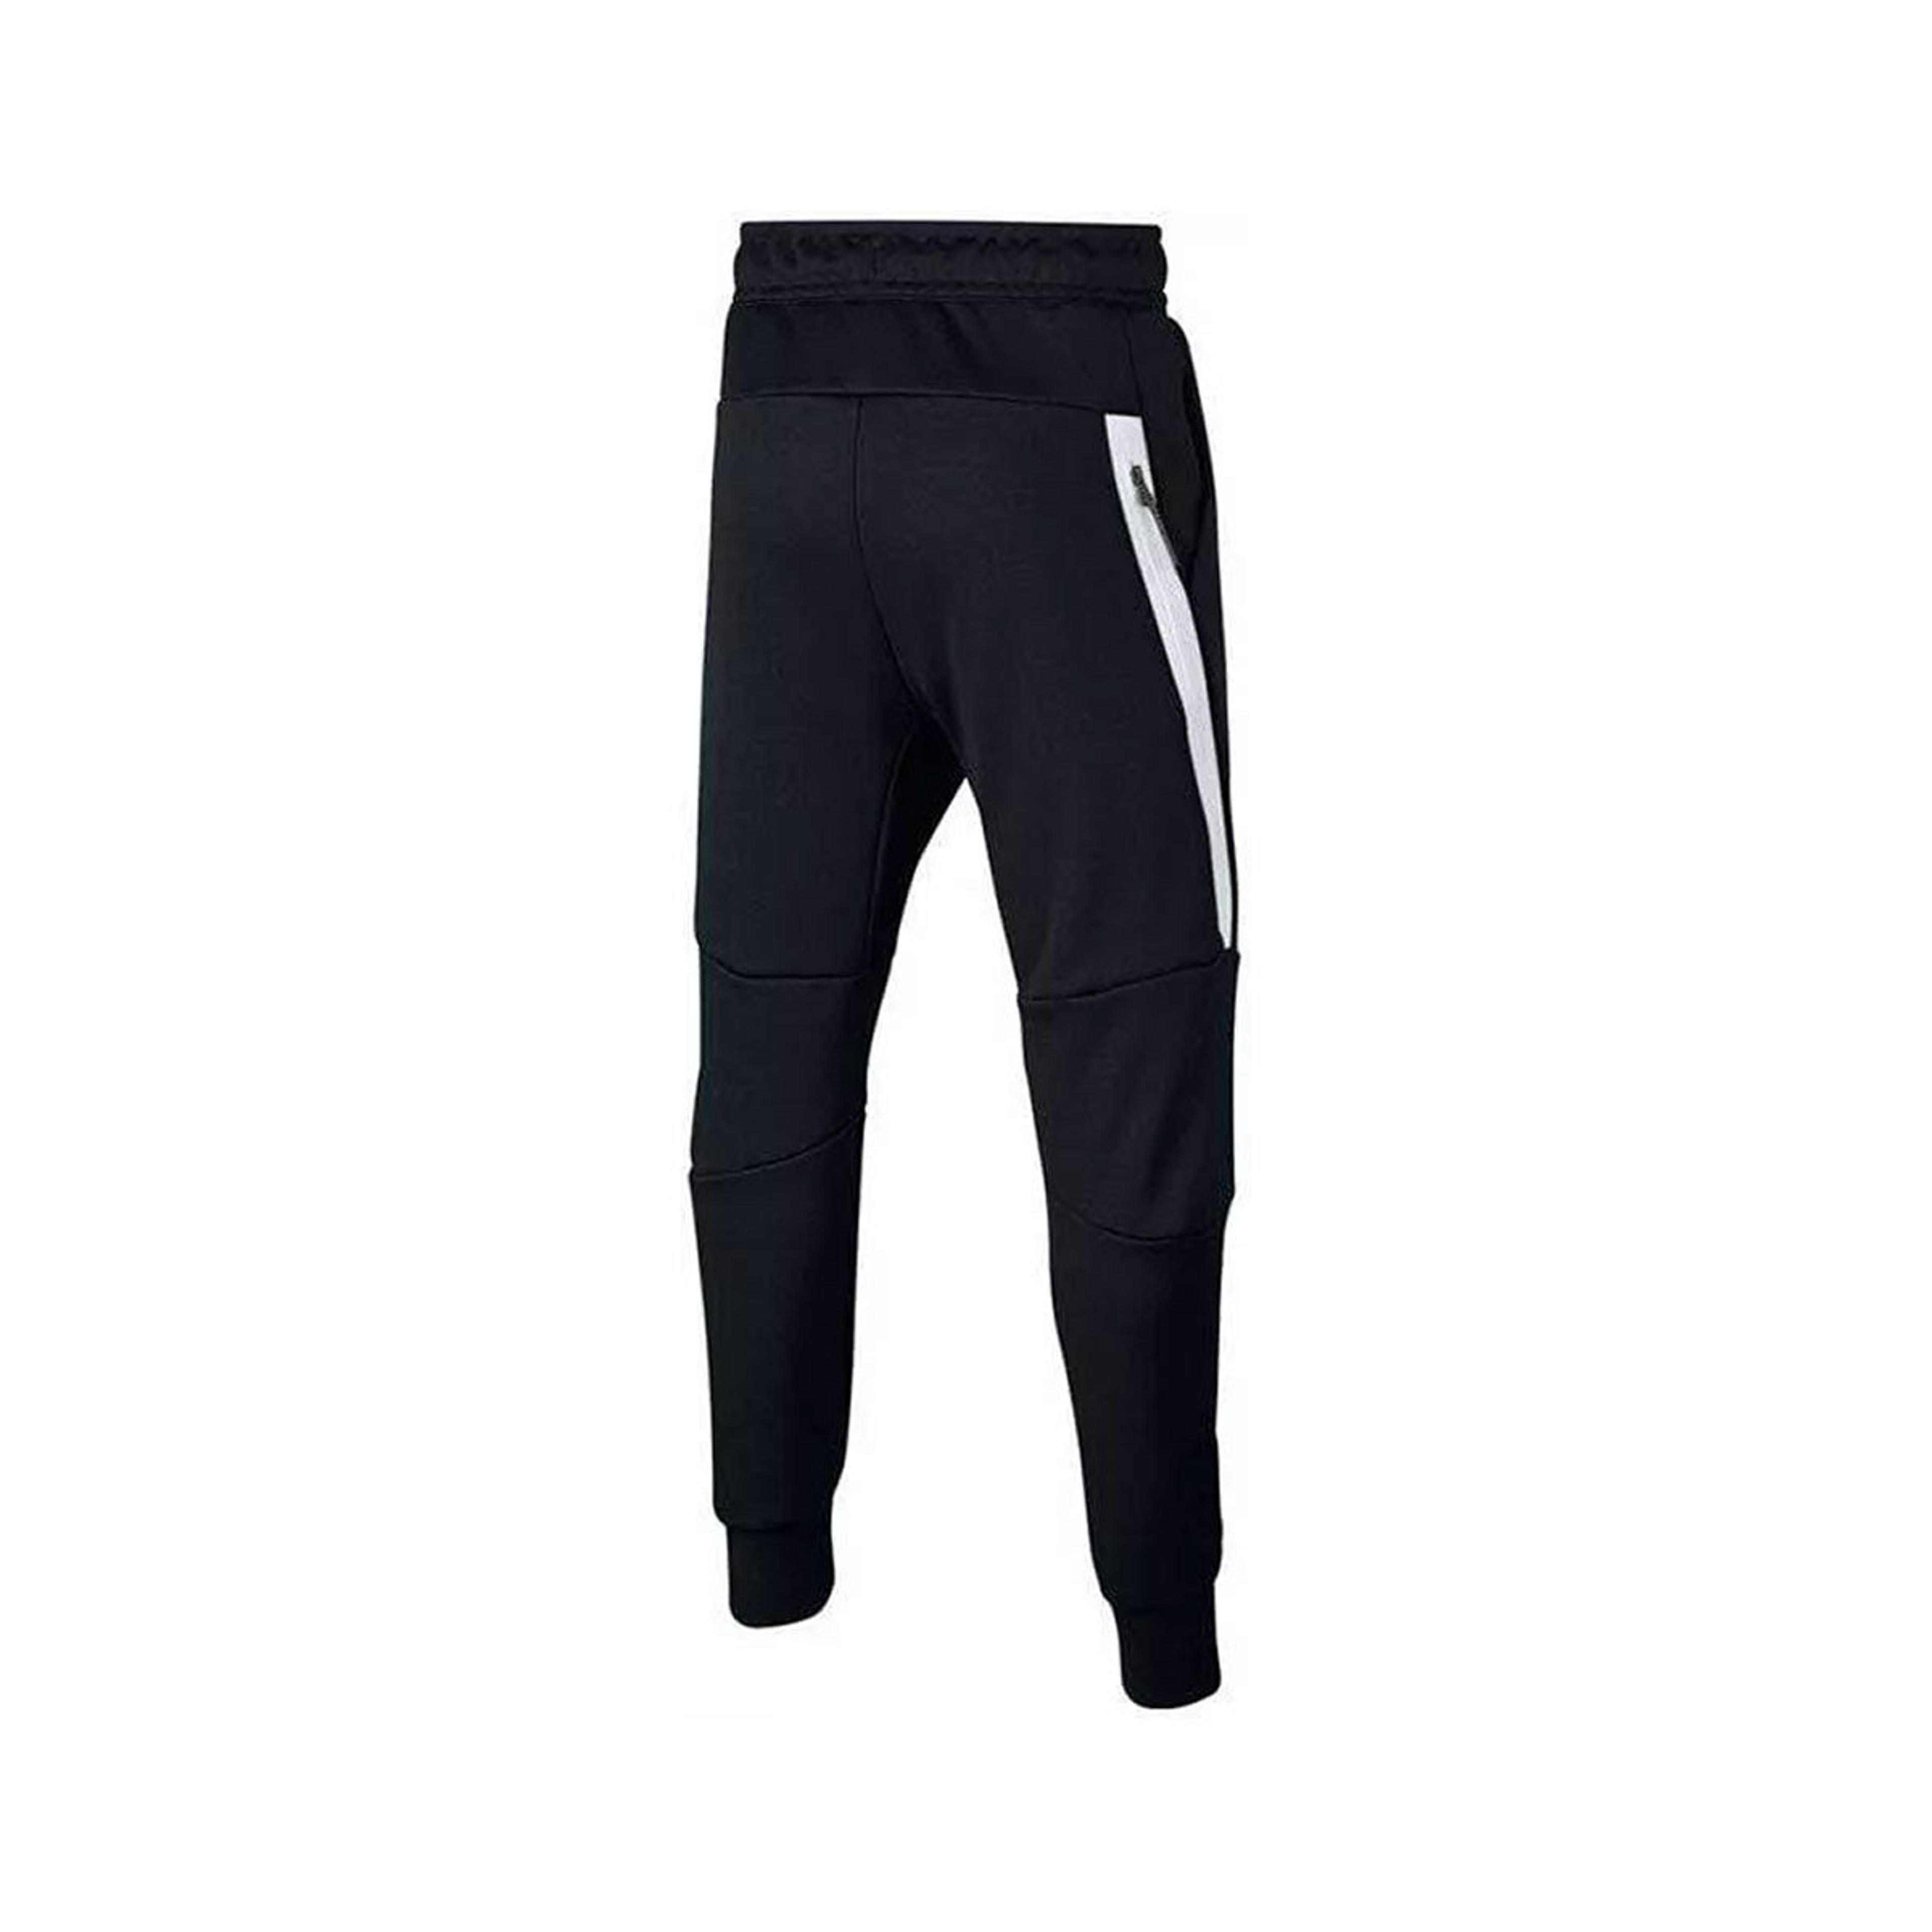 Alternate View 4 of Nike Boy's Tech Fleece Pants Joggers